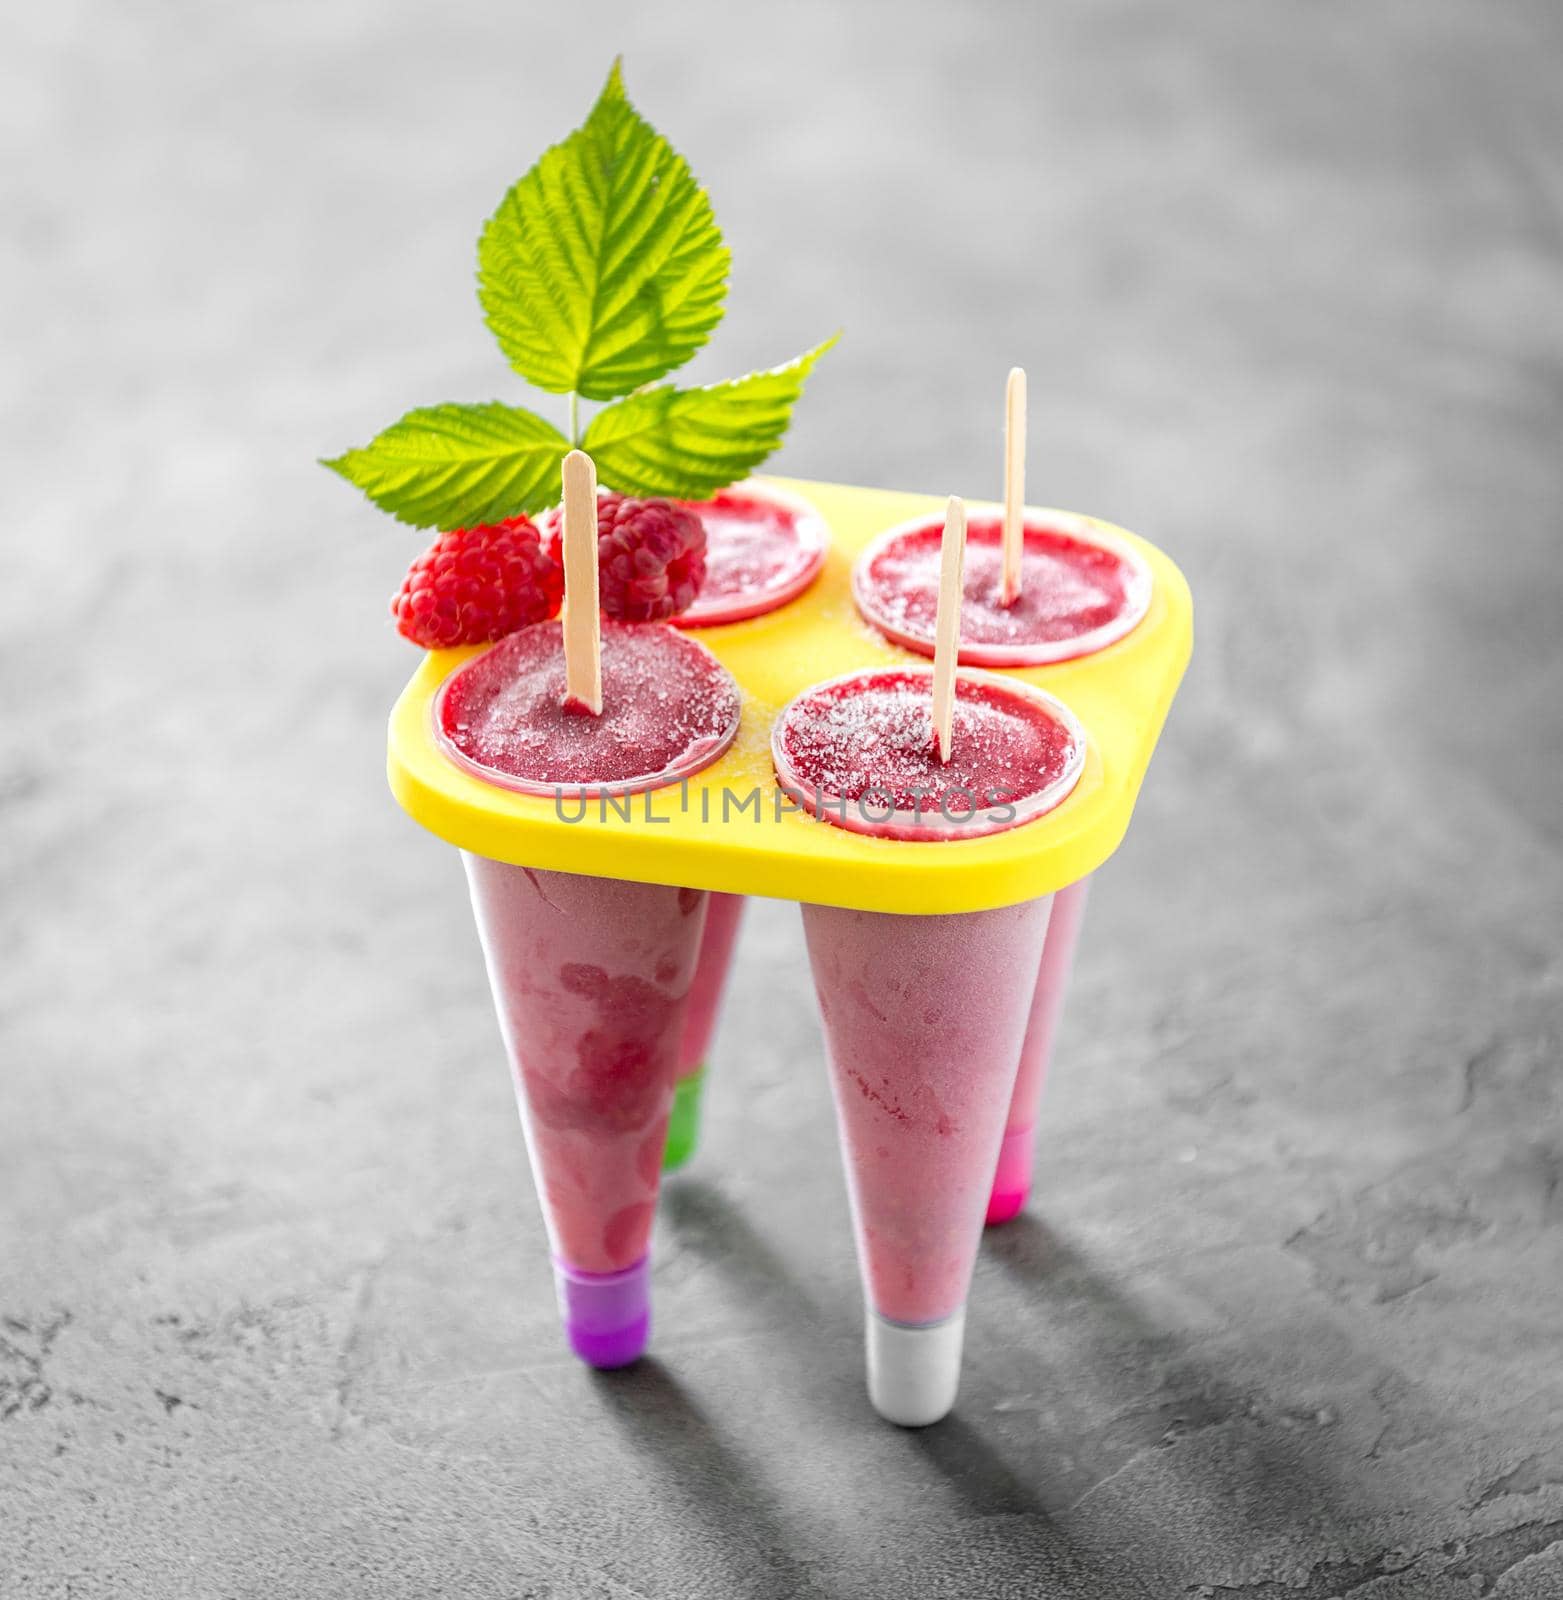 homemade raspberry cones standing in yellow ice-cream container by tan4ikk1